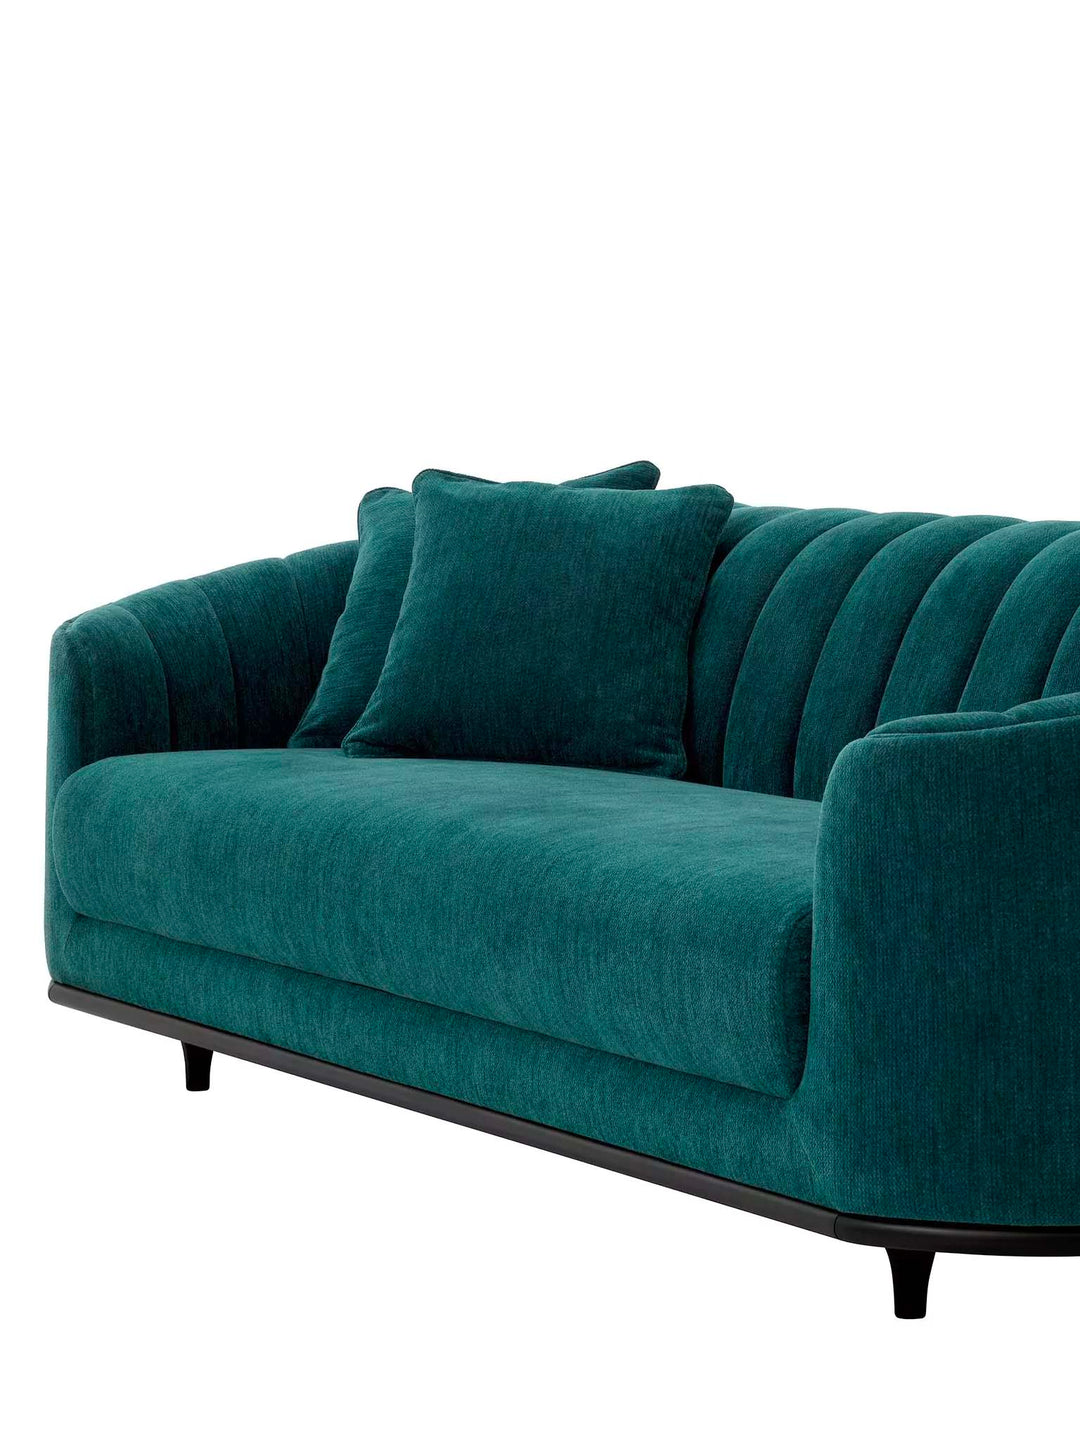 Sea Green Sofa, Luxury Designer Sofa Hand Crafted